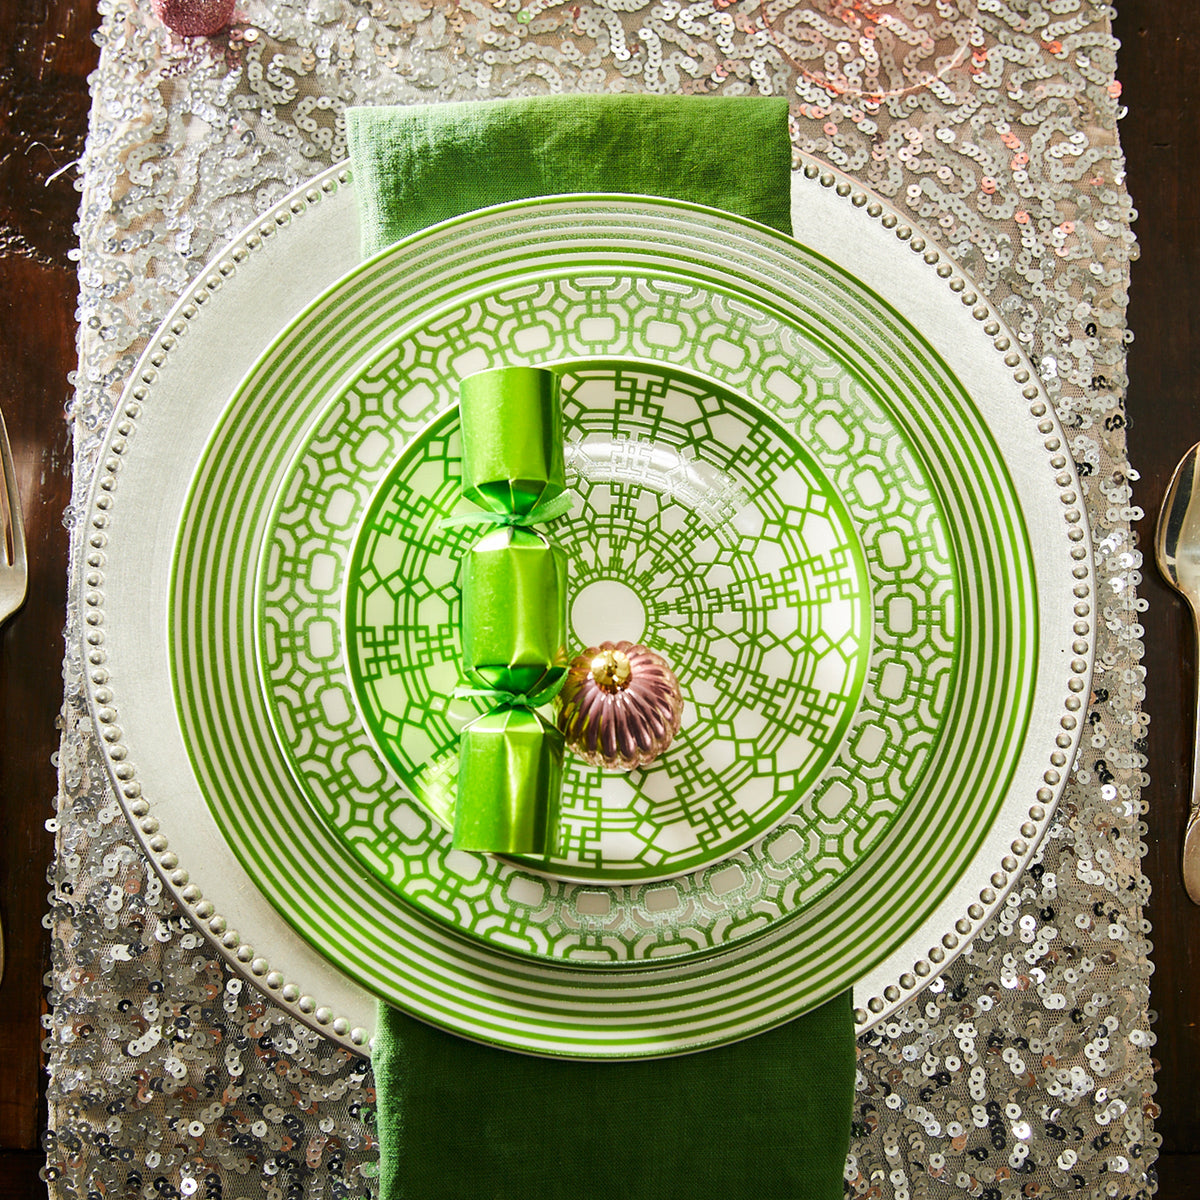 A Newport Garden Gate Salad Plate Green by Caskata Artisanal Home with a green bow on it.